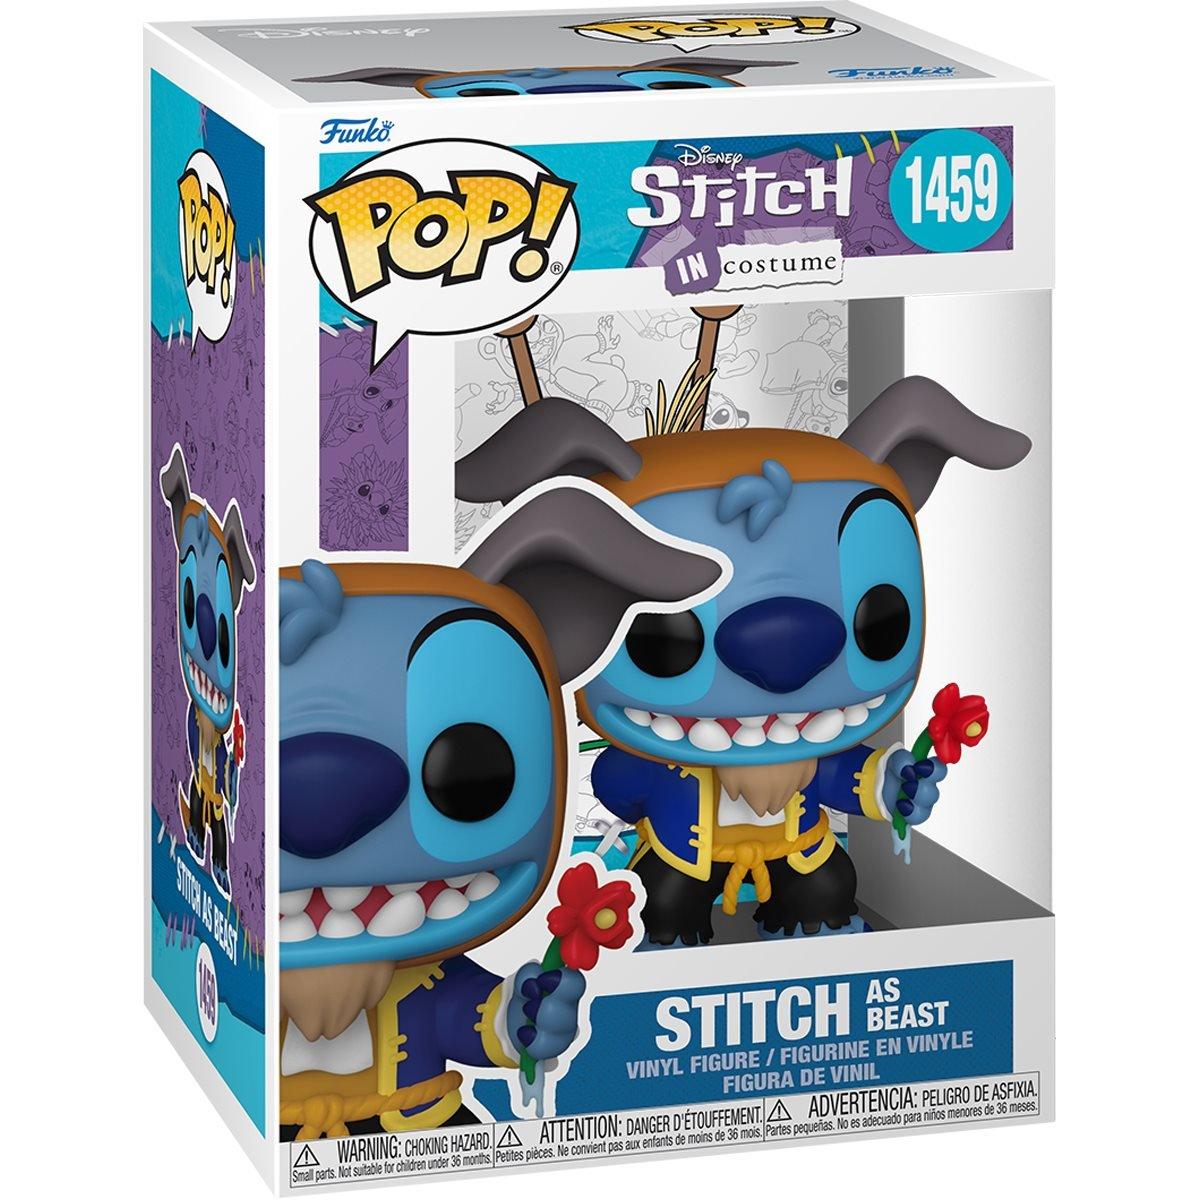 Lilo & Stitch - Costume Stitch as Beast Pop! Vinyl